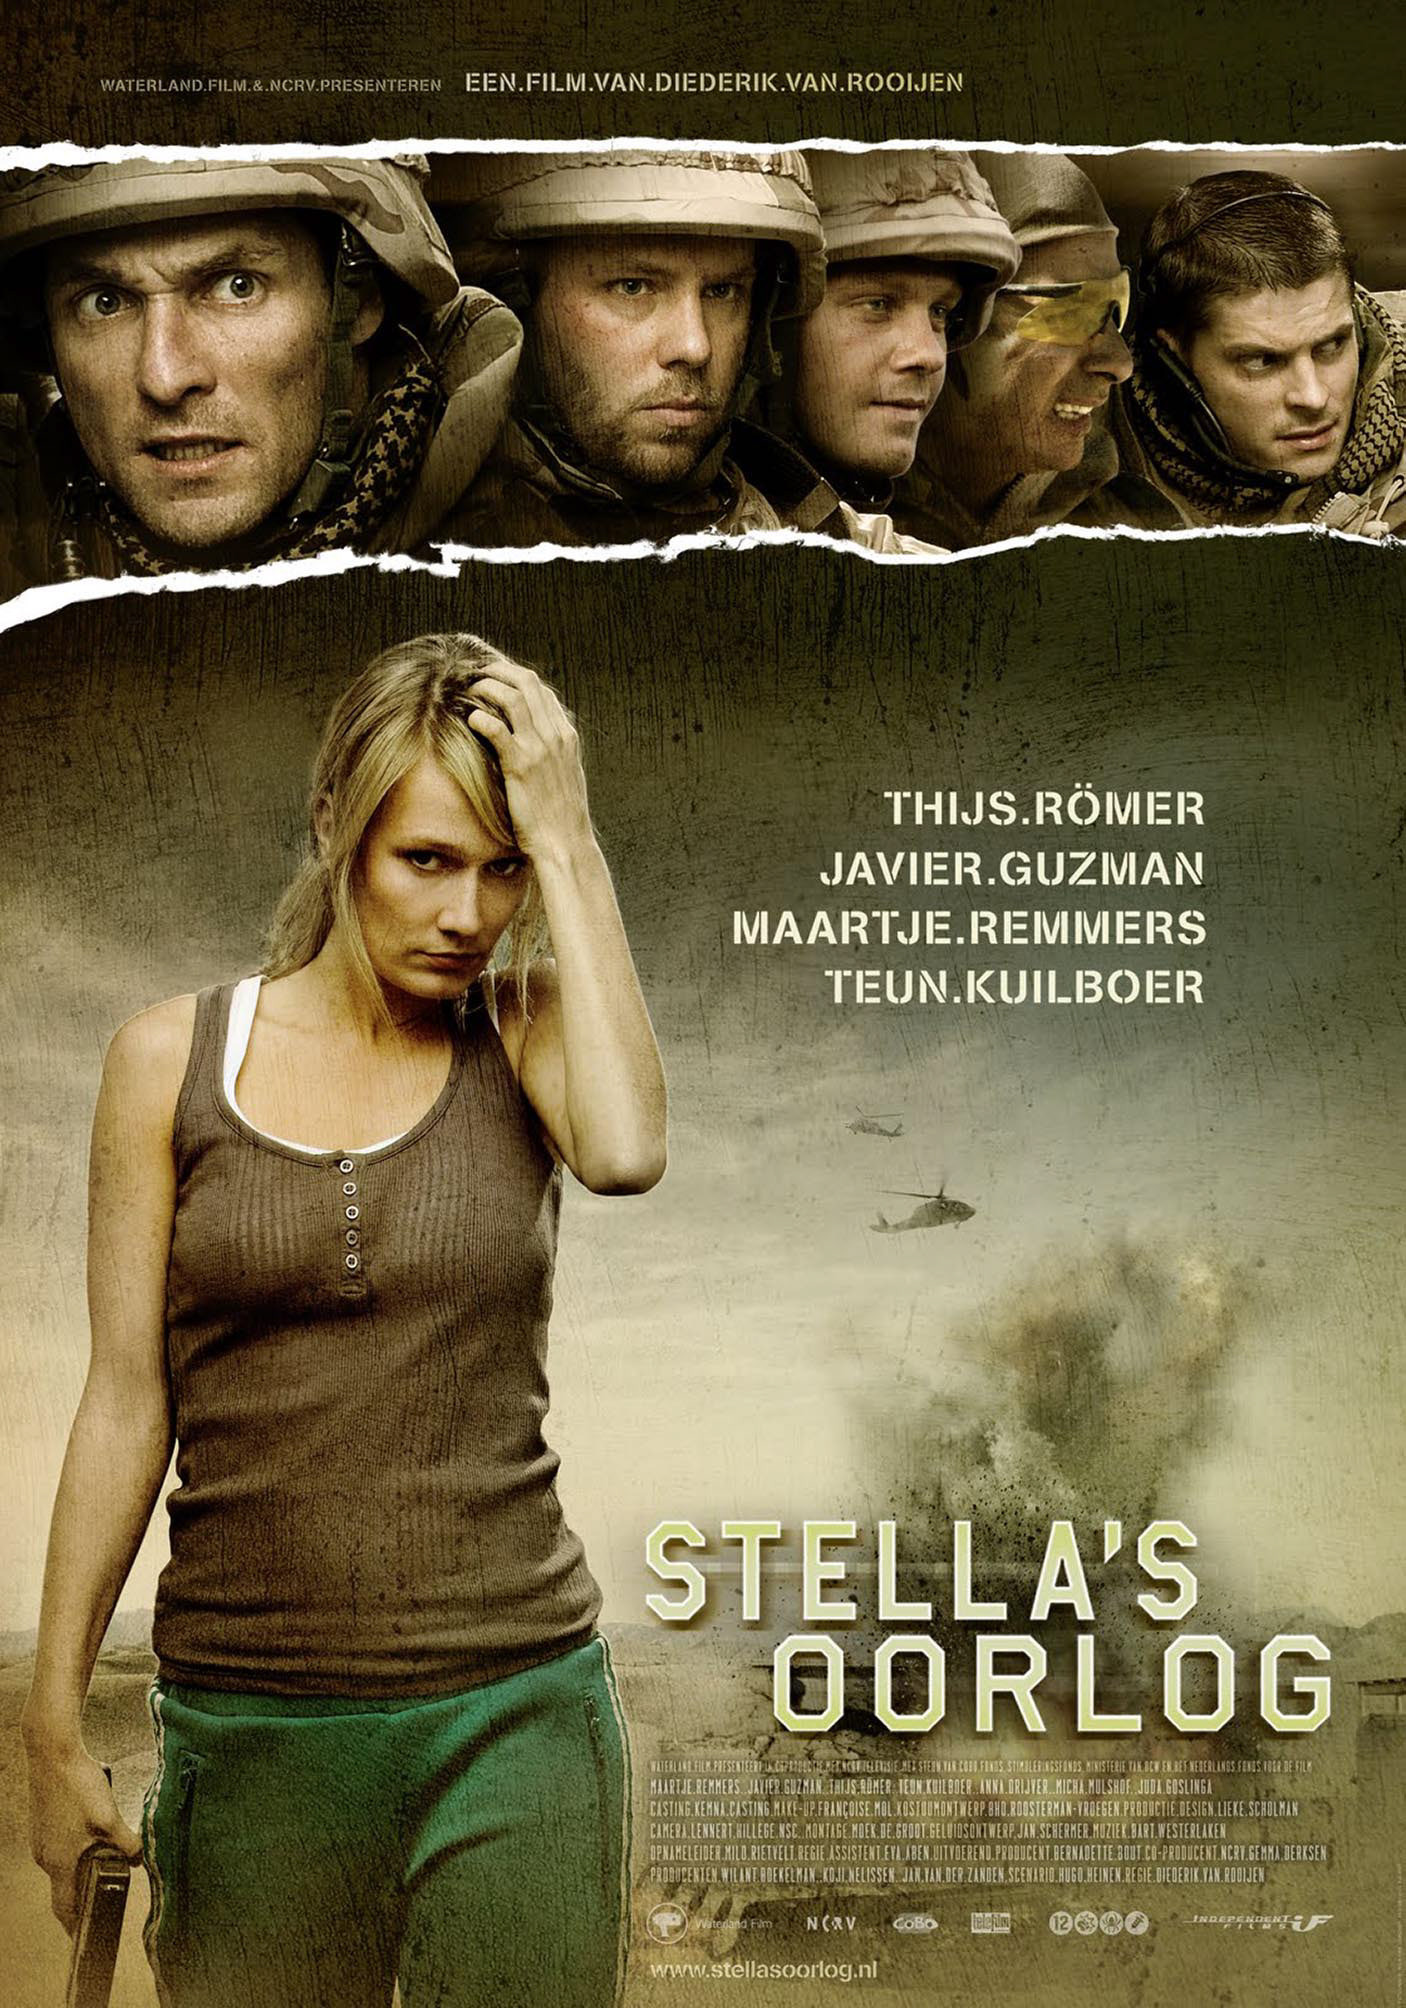 Mega Sized Movie Poster Image for Stella's oorlog (#2 of 2)